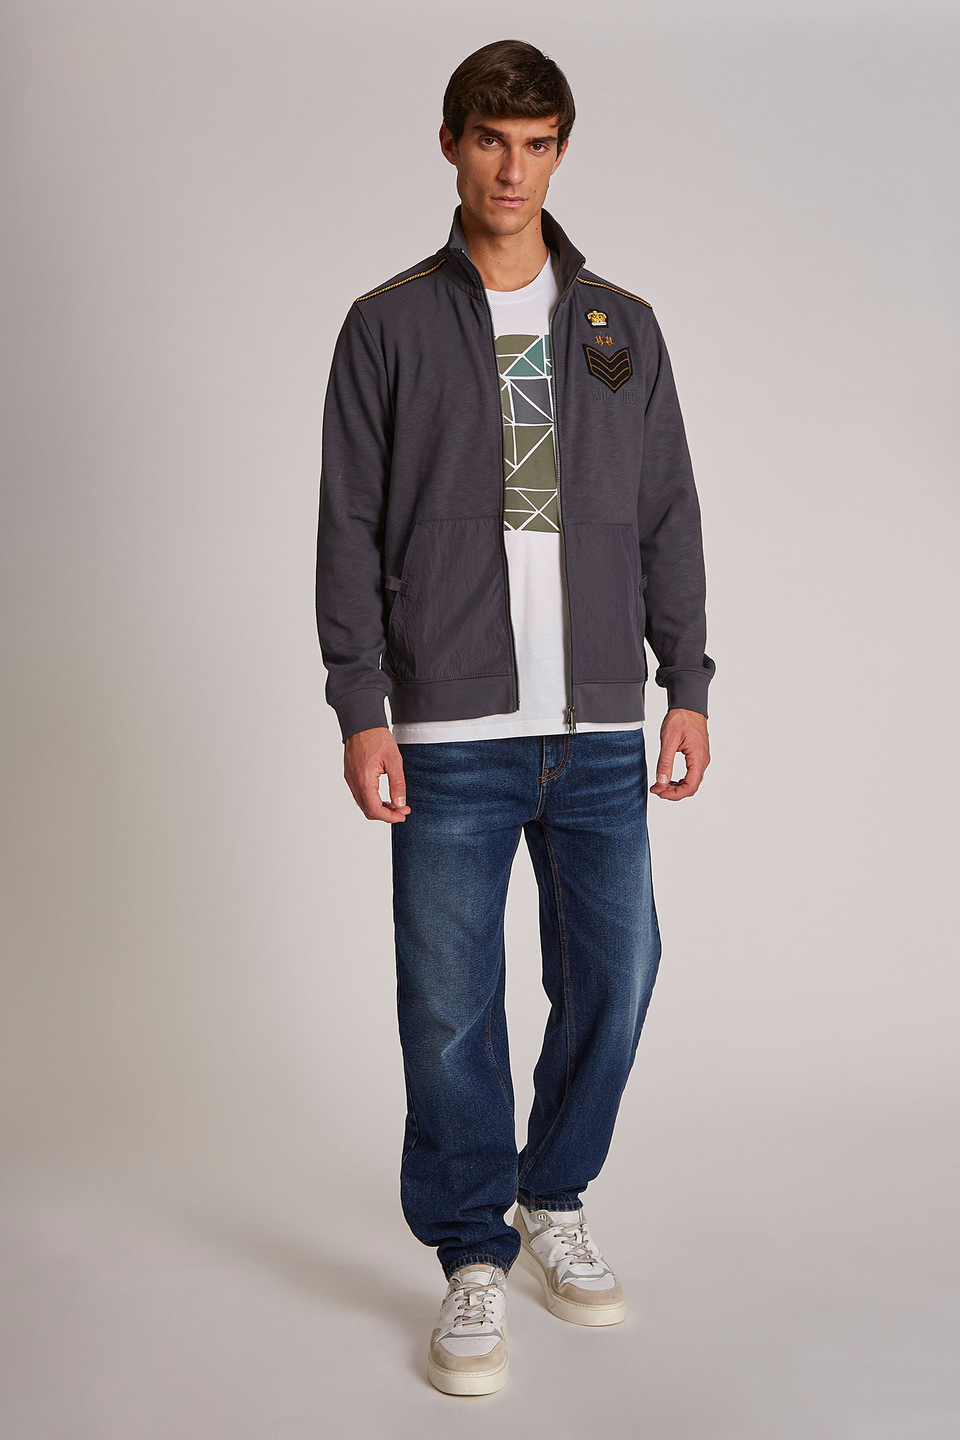 Men's regular-fit 100% cotton sweatshirt | La Martina - Official Online Shop